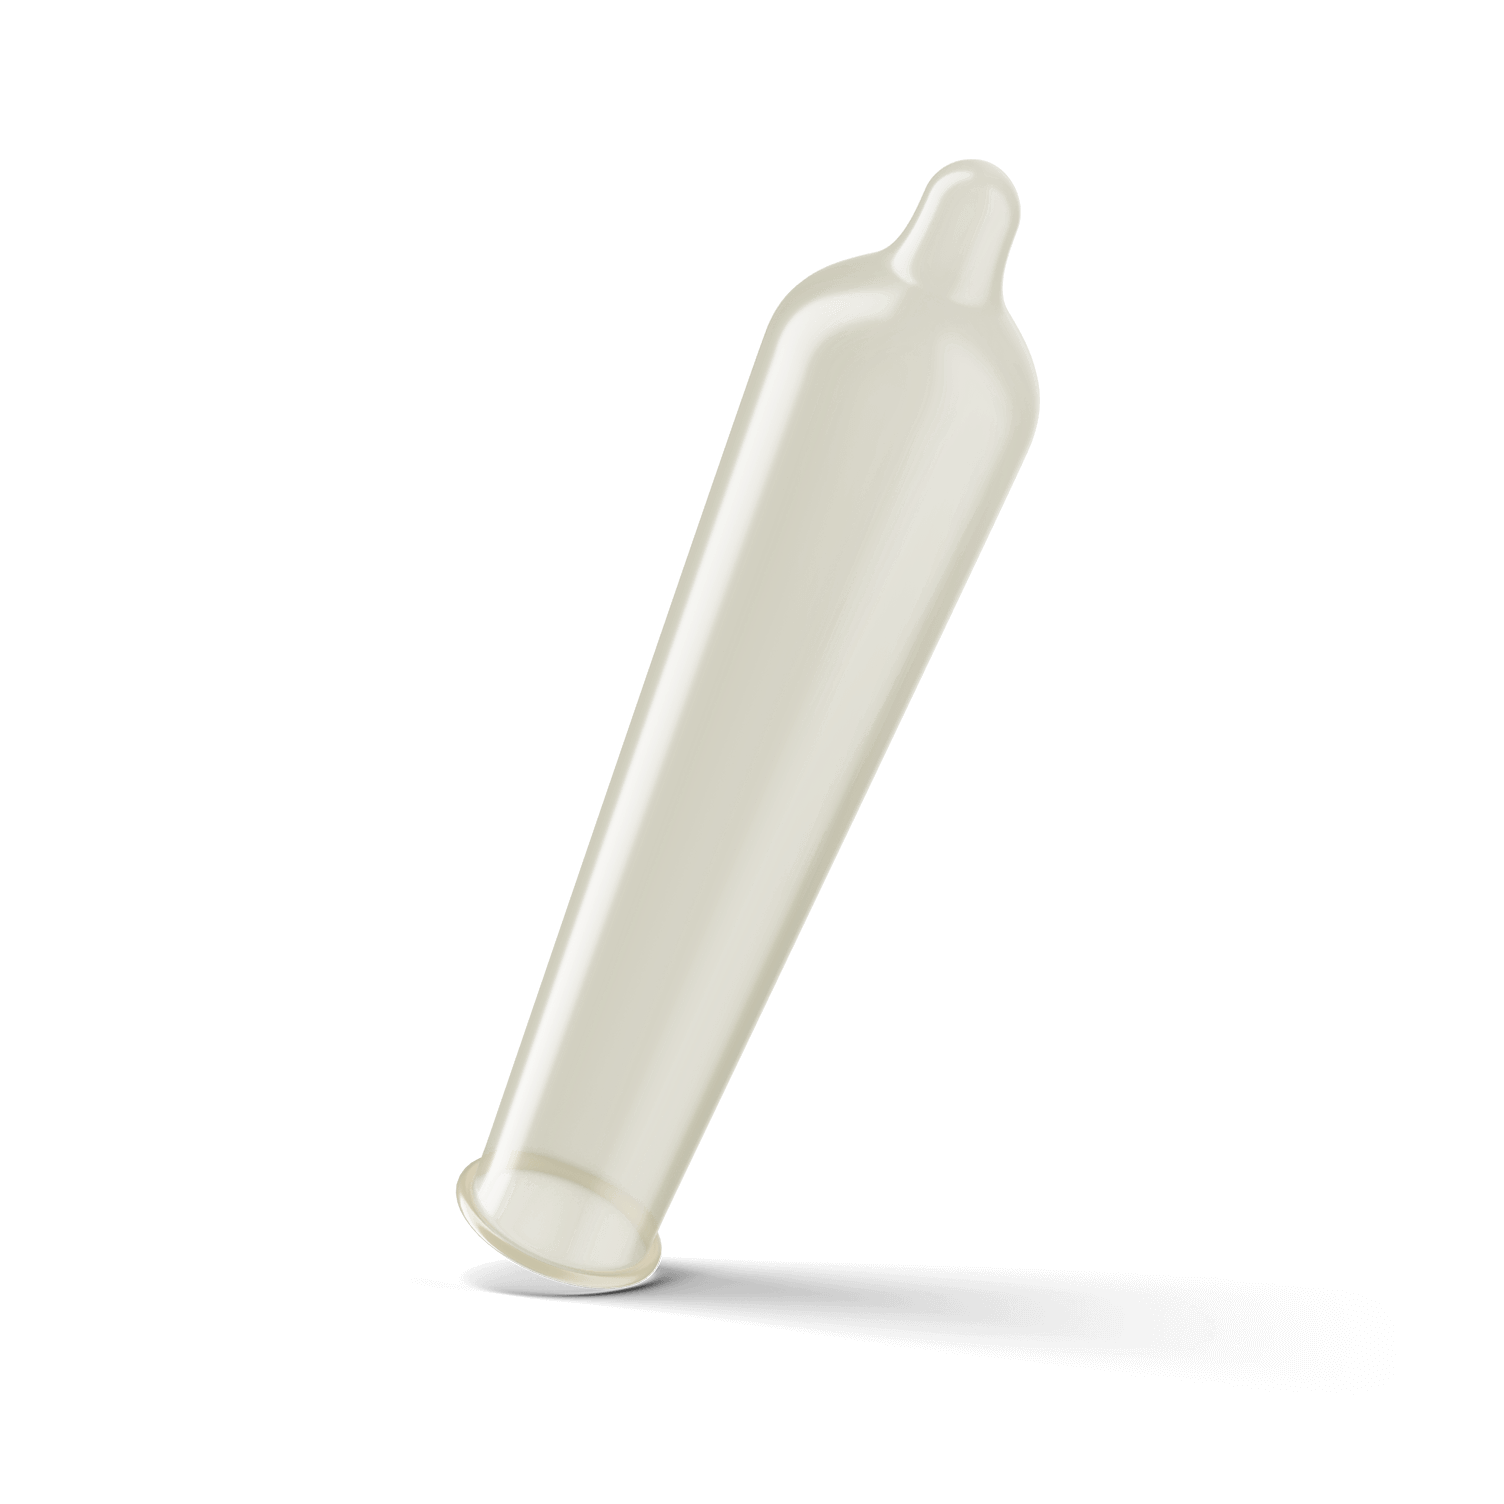 Trojan Magnum extra large condom shape with reservoir tip.